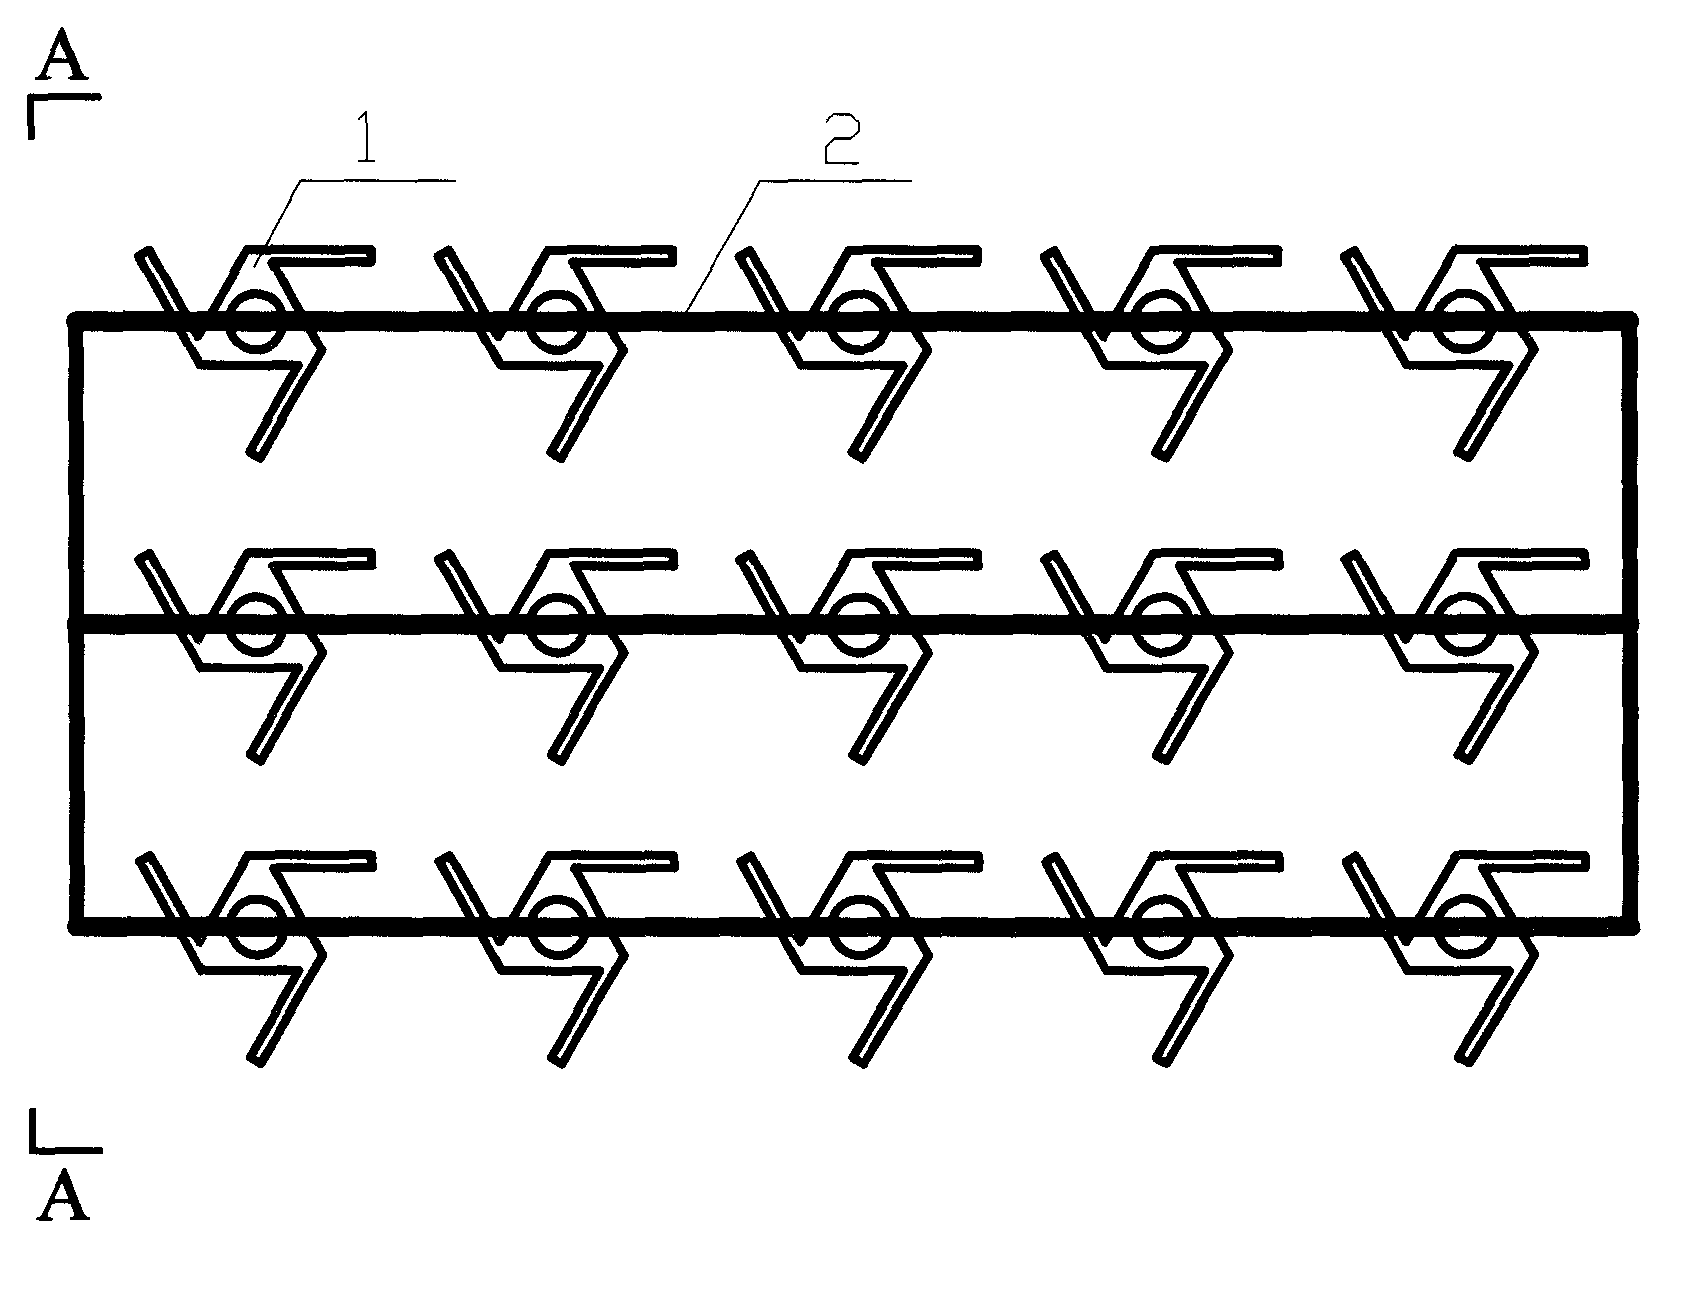 Spinning type micro-vortex flocculation device